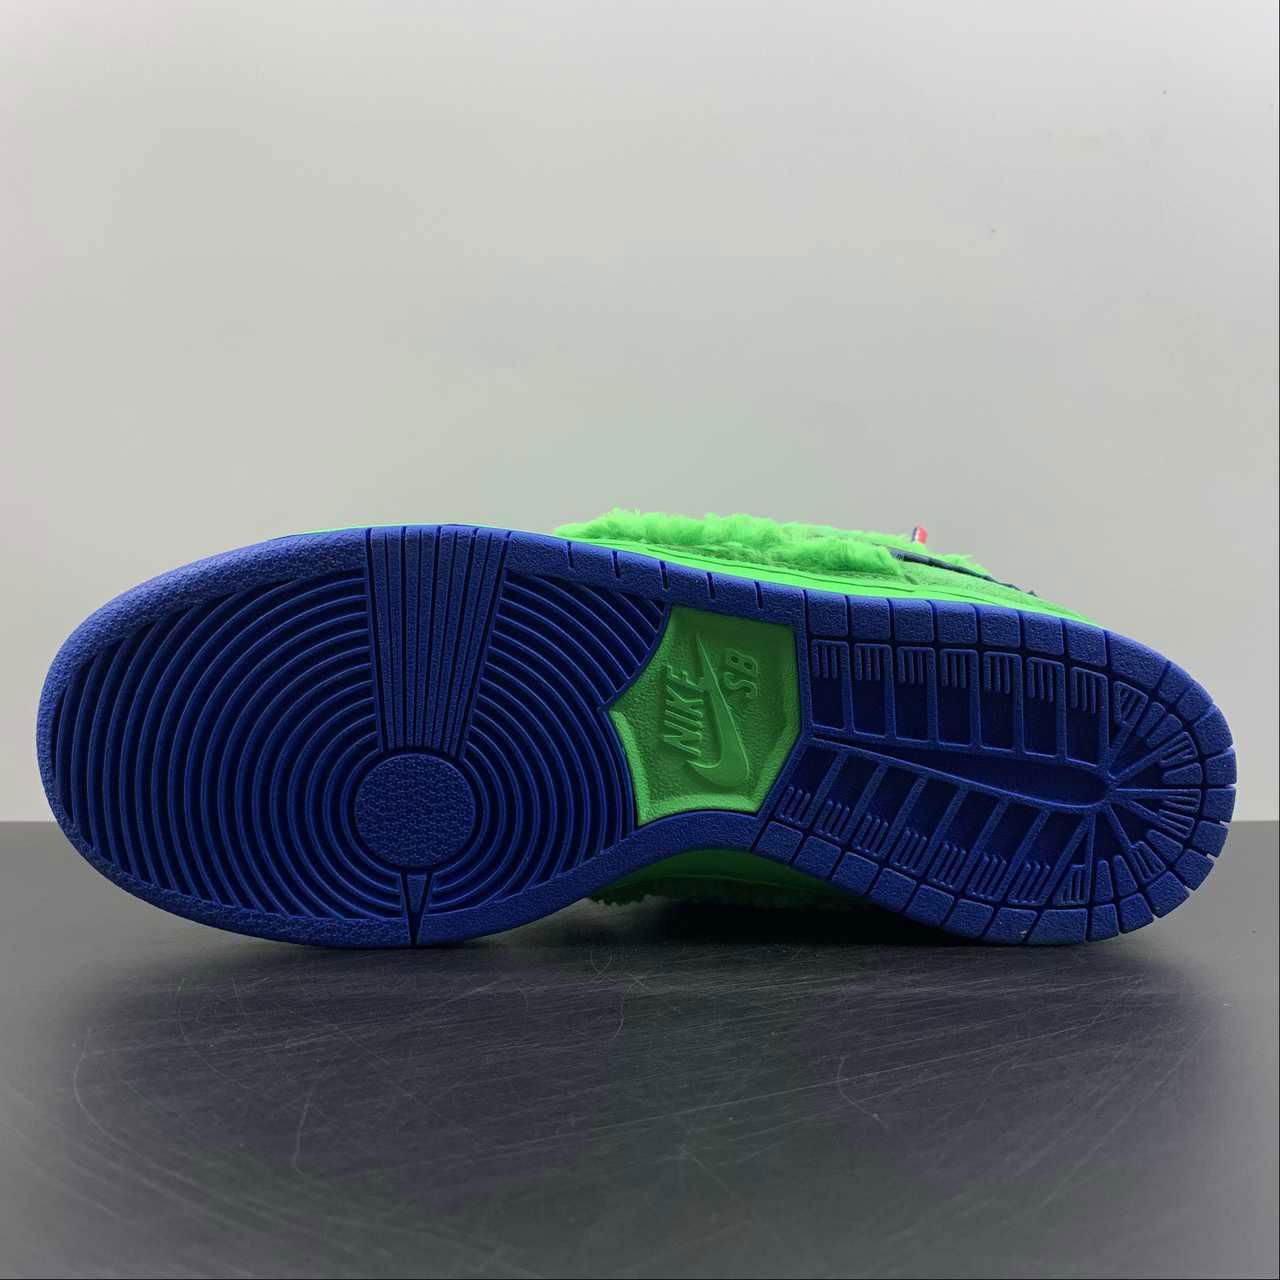 2022      SB Dunk Low PRO QS GREEN SPARK/SOAR top casual board shoes CJ5378-300  5